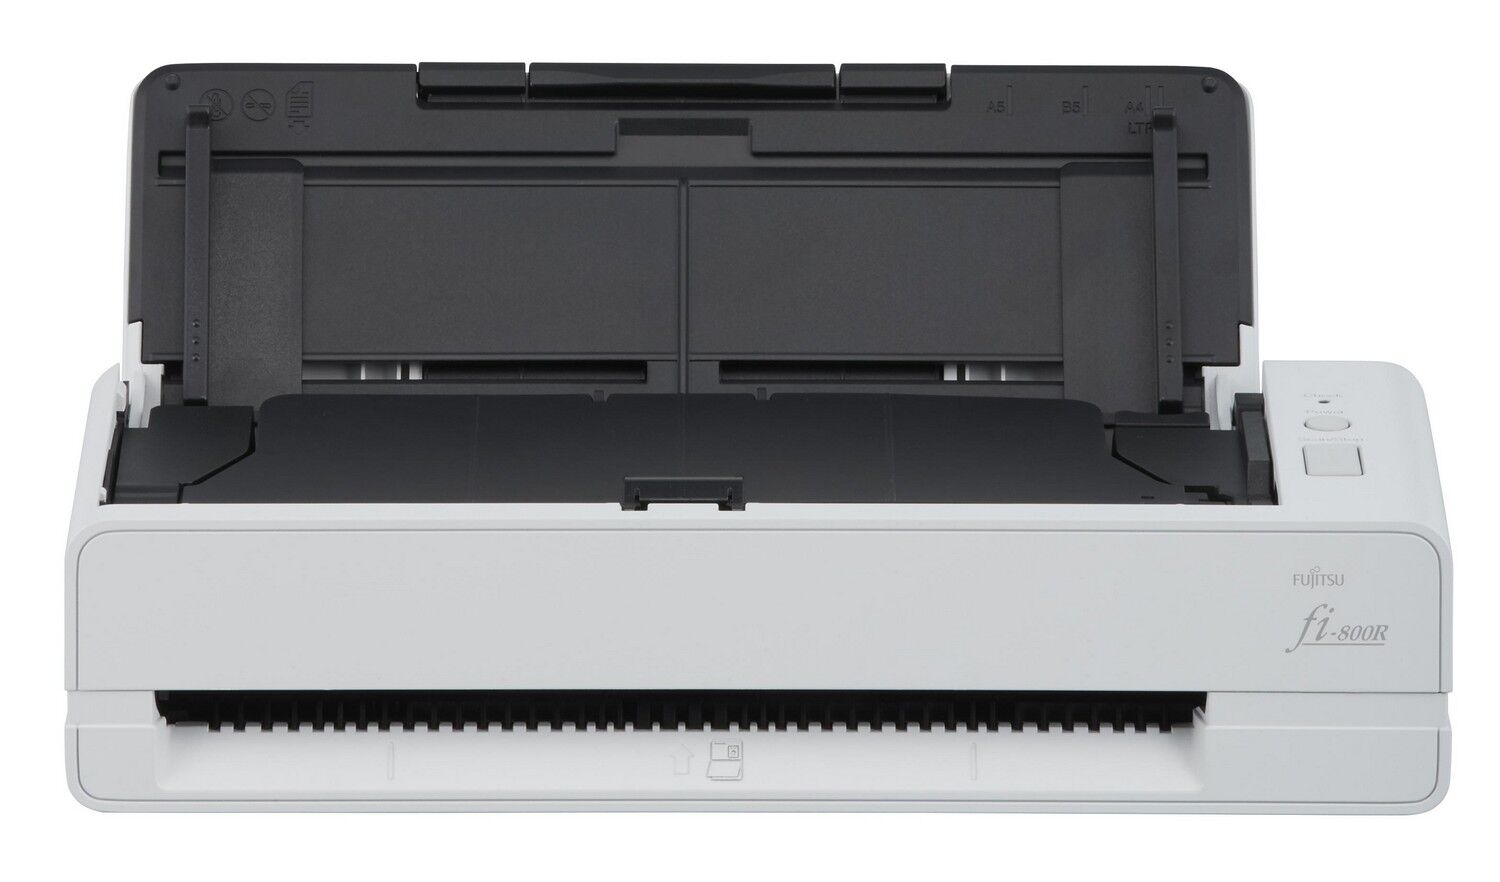 Fujitsu Scanner Fi-800r 600 X 600 Dpi Adf A4 (preto, Branco) - Fujitsu